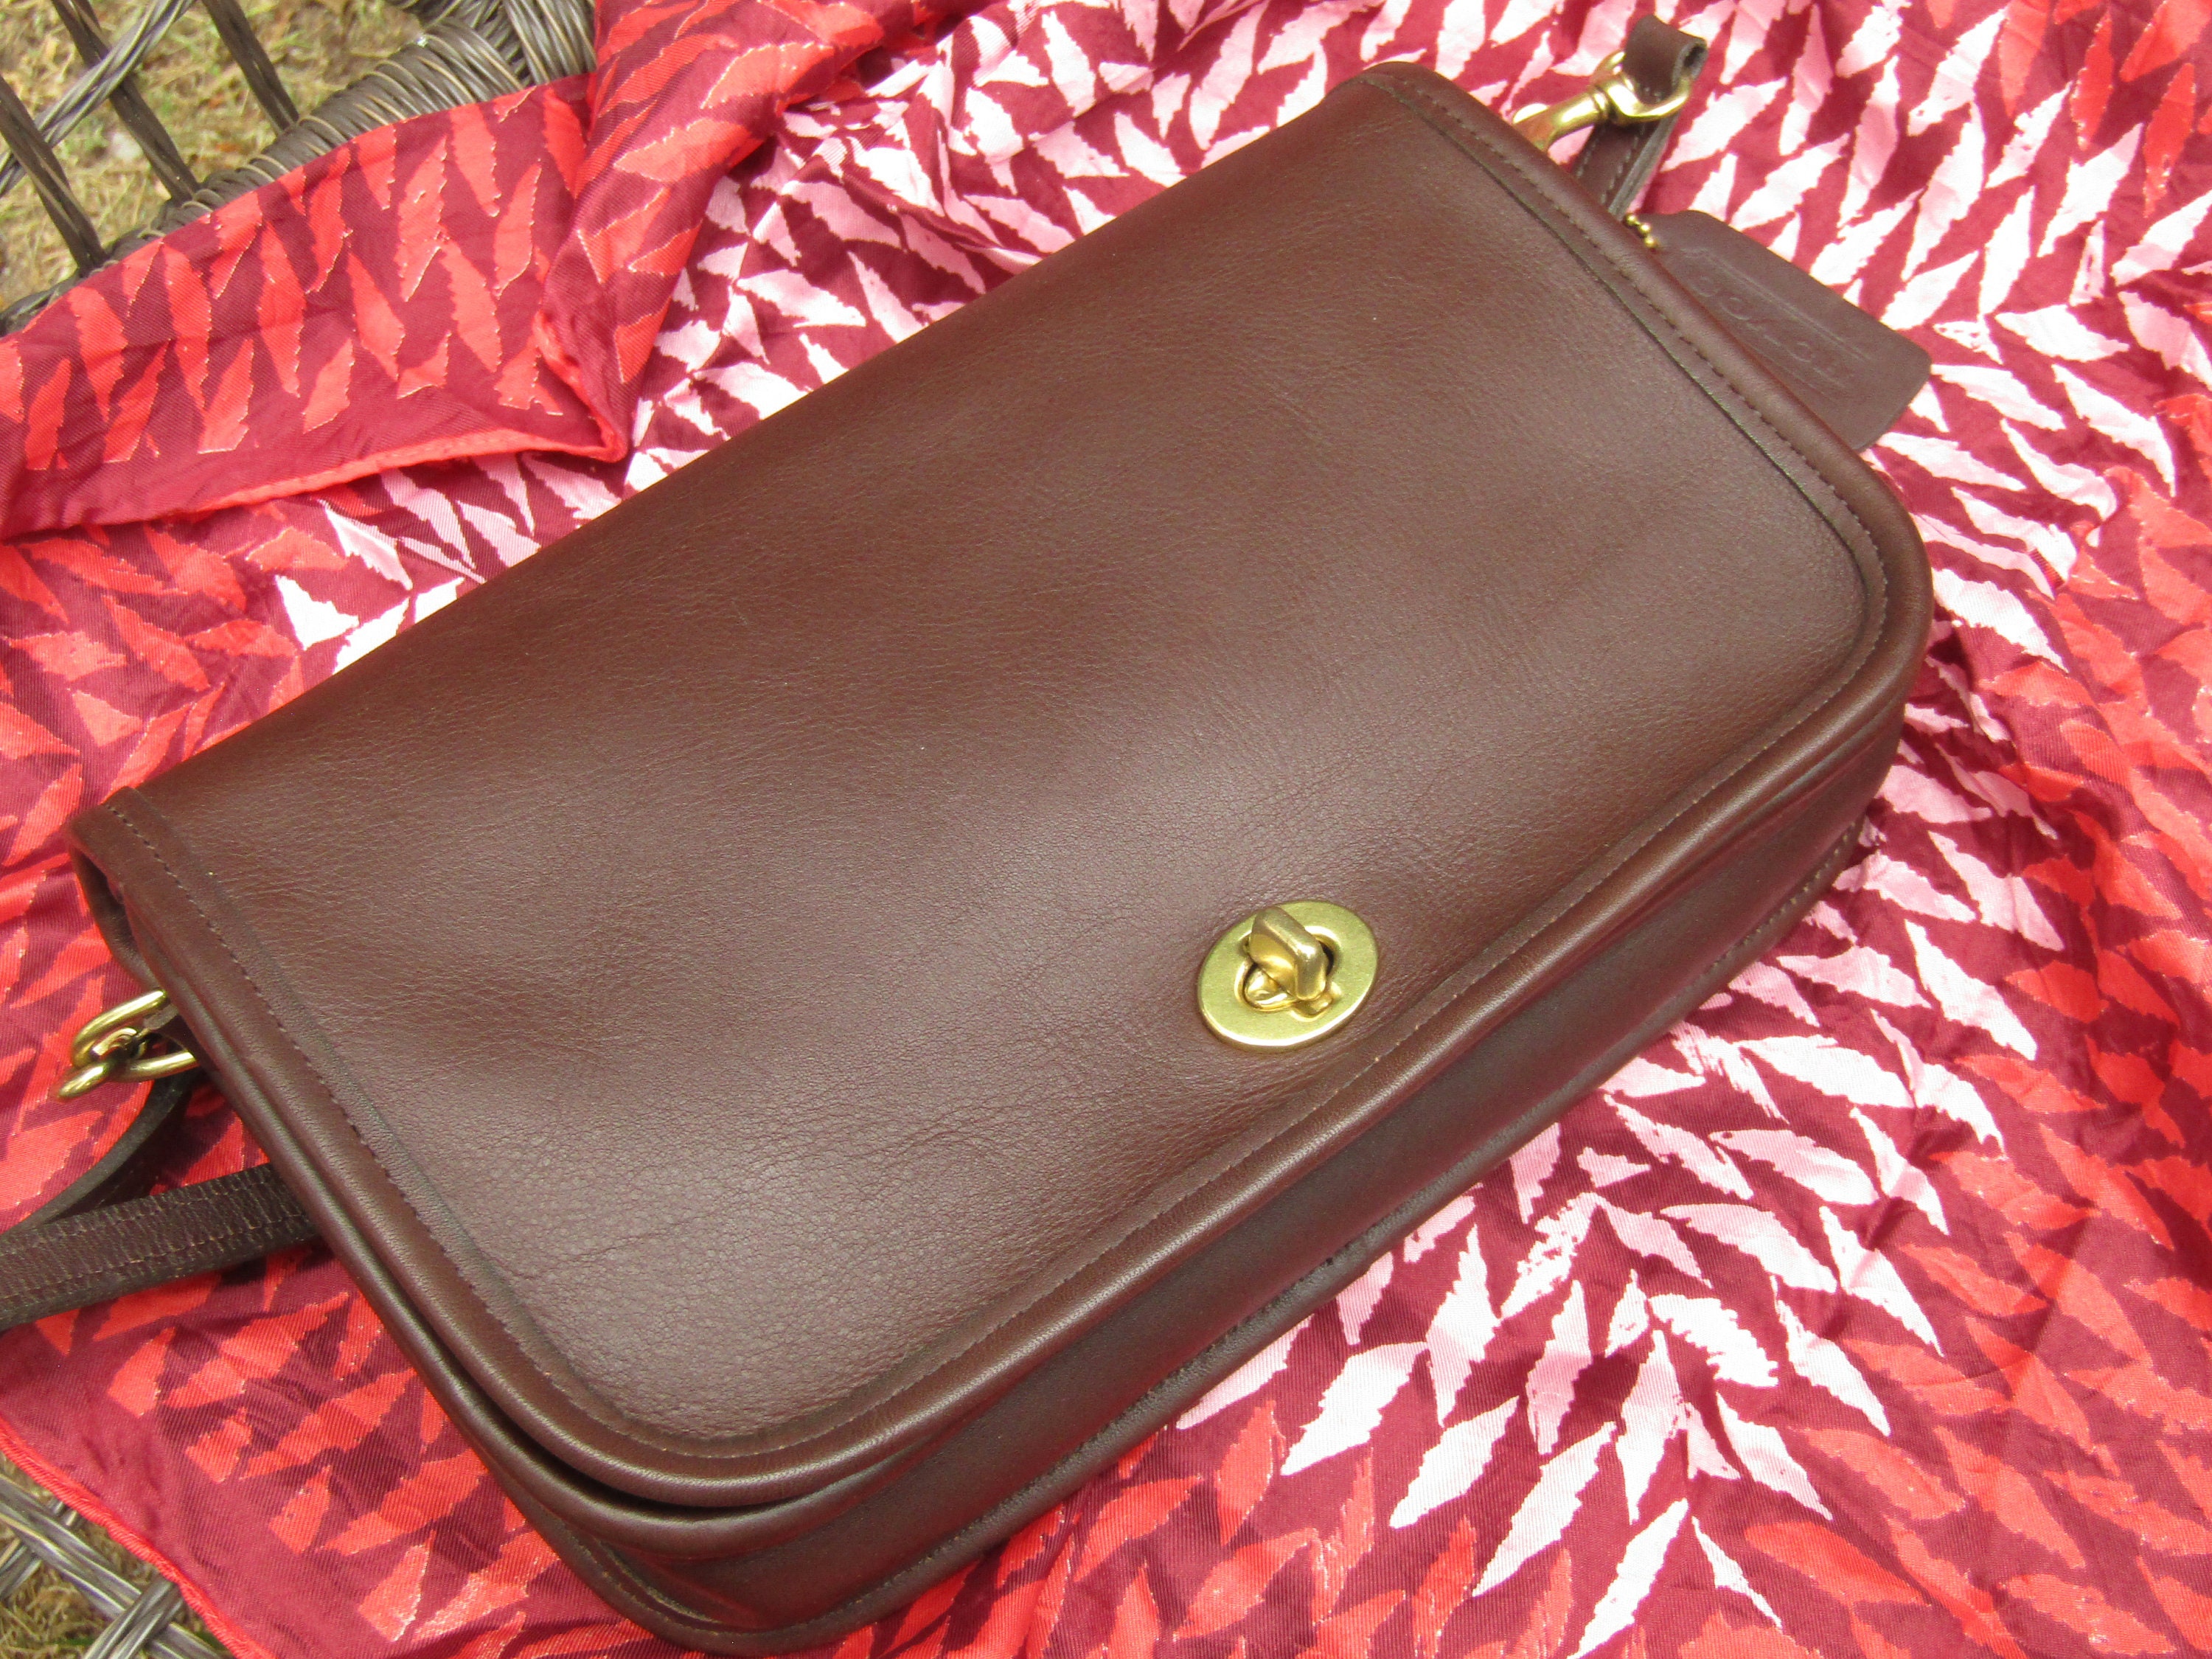 Vintage Coach Bag Penny Pocket Bag in Brown Leather Crossbody 